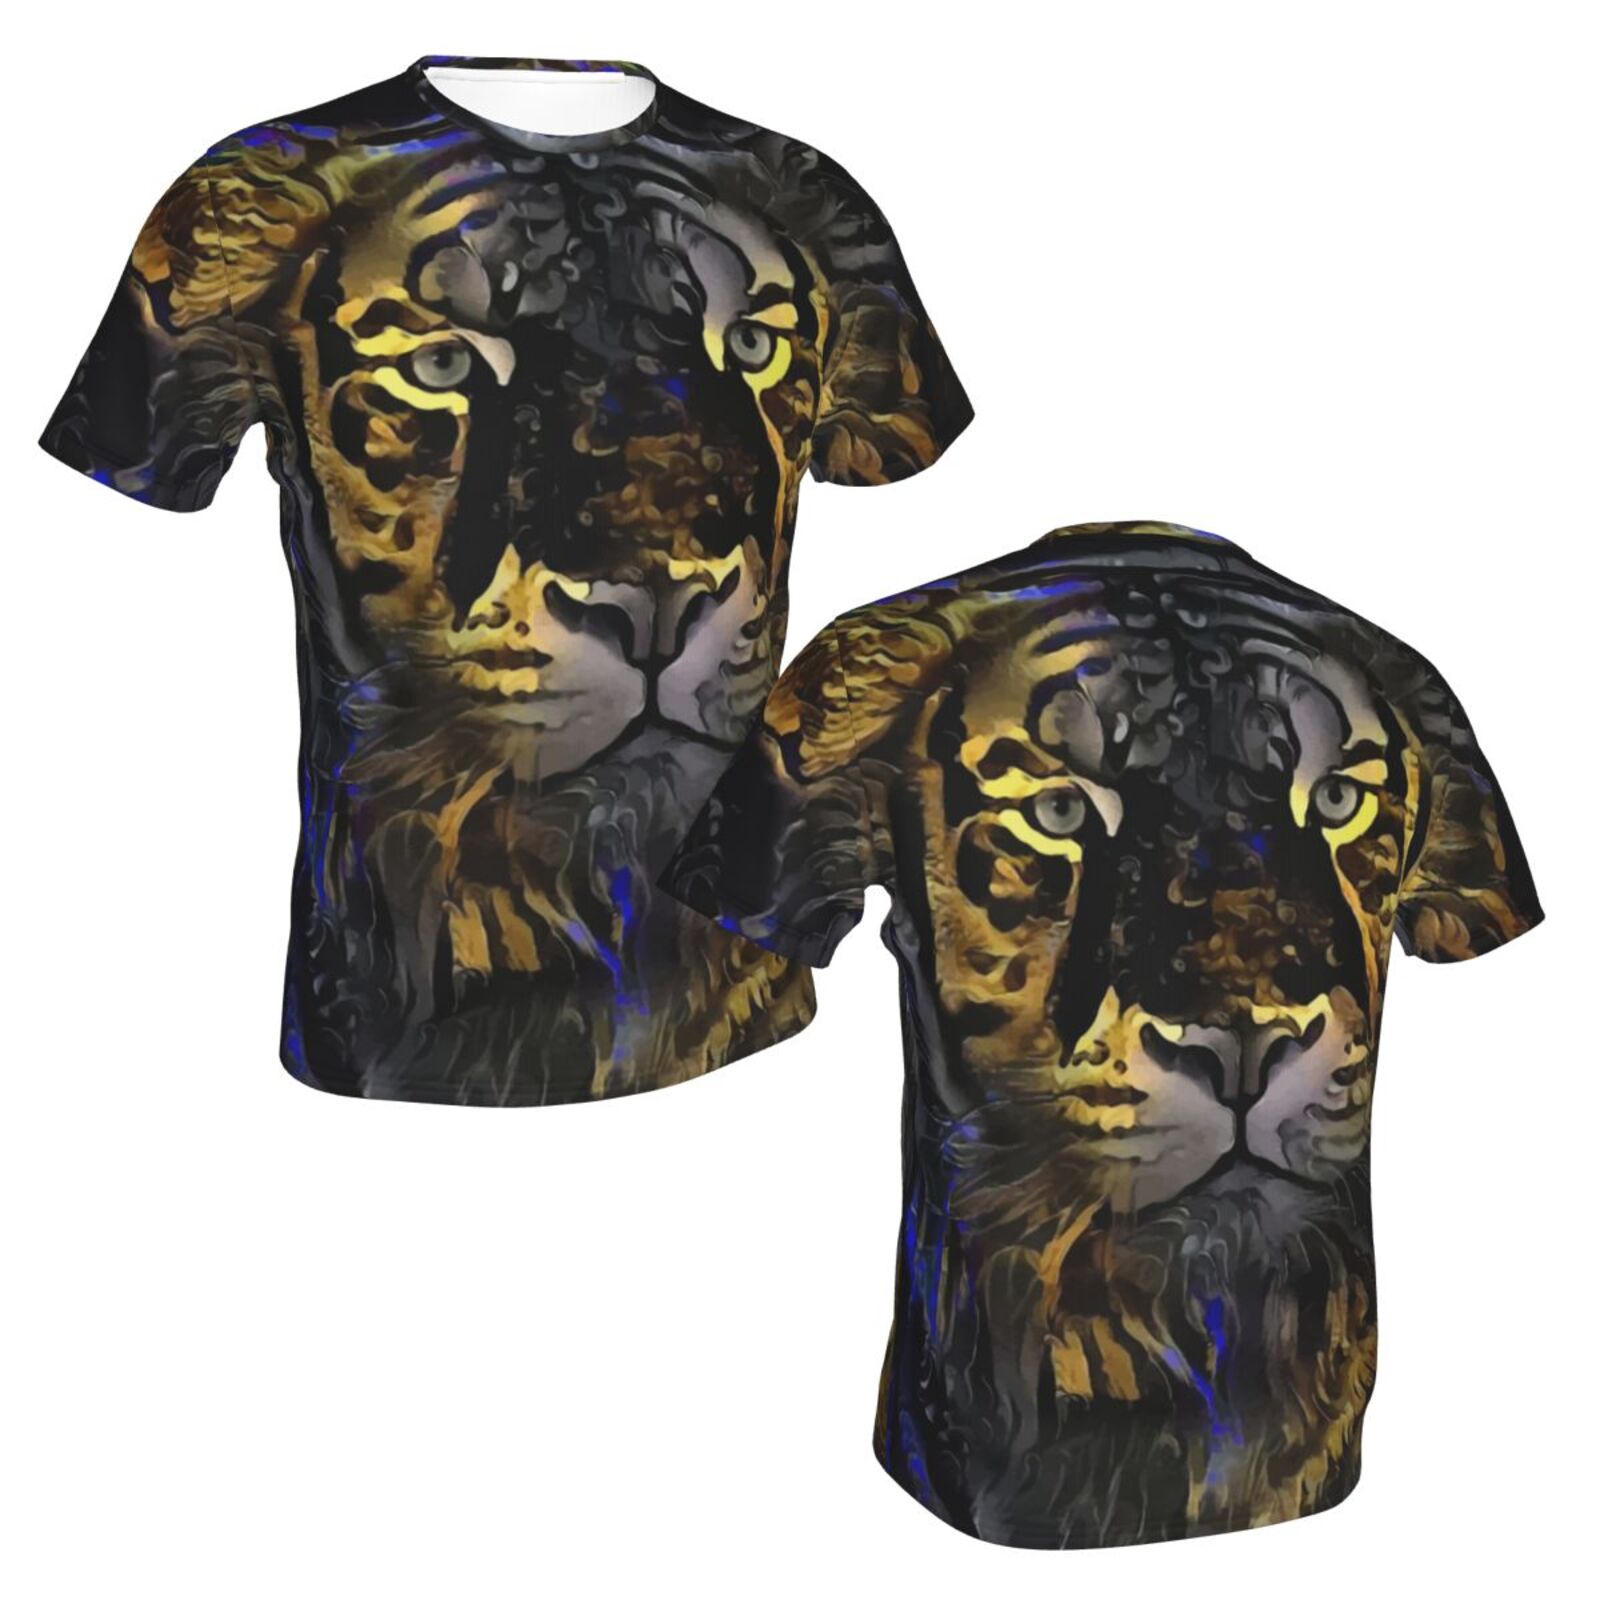 Tigermoon 2021 Blandet Medieelementer Klassisk T-shirt